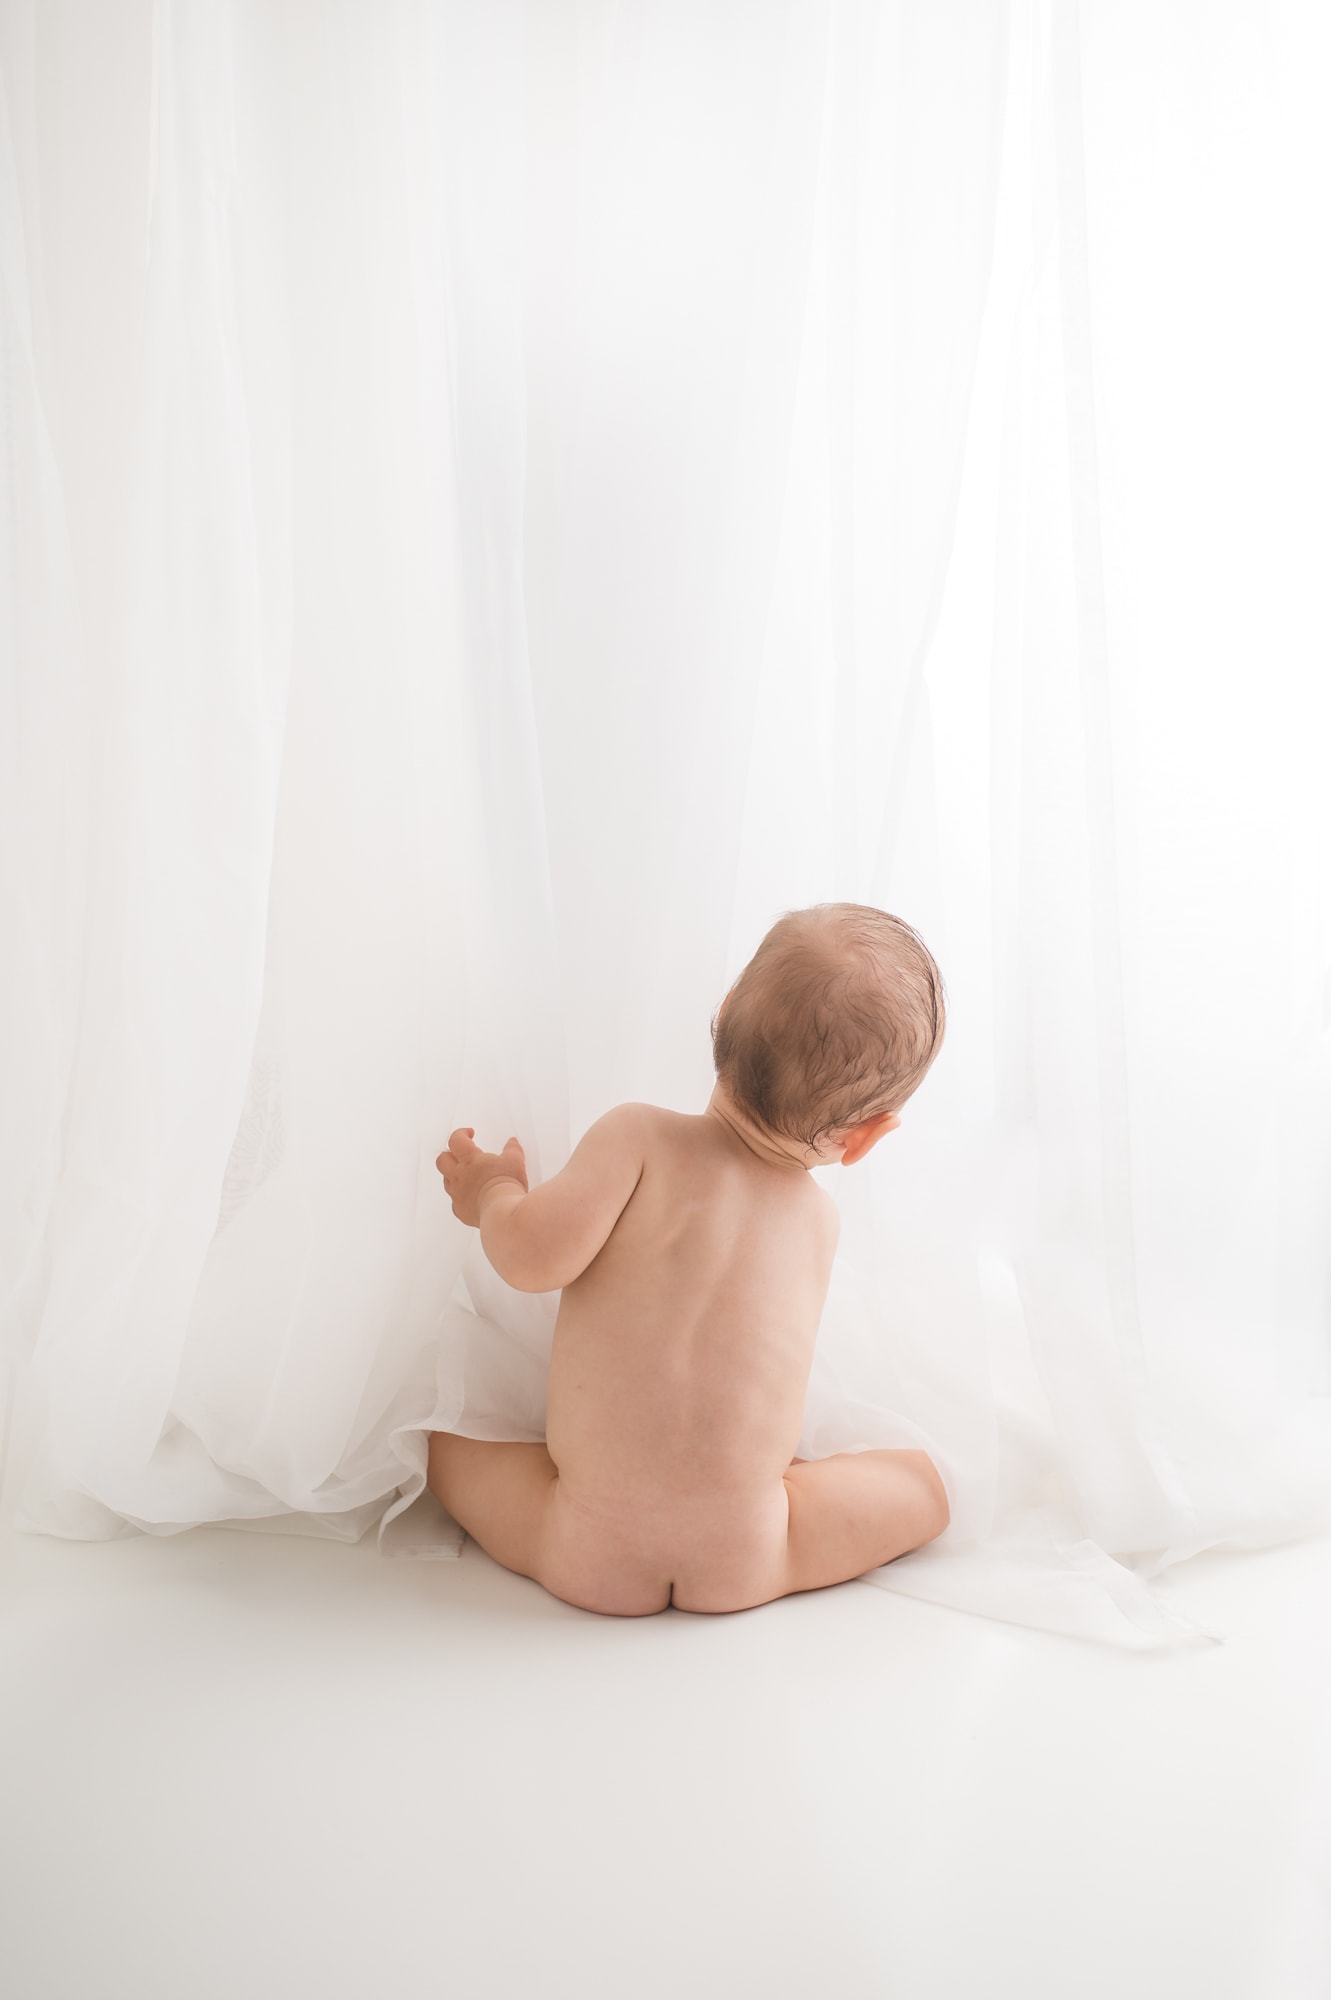 Cute naked baby peeking through white curtains.